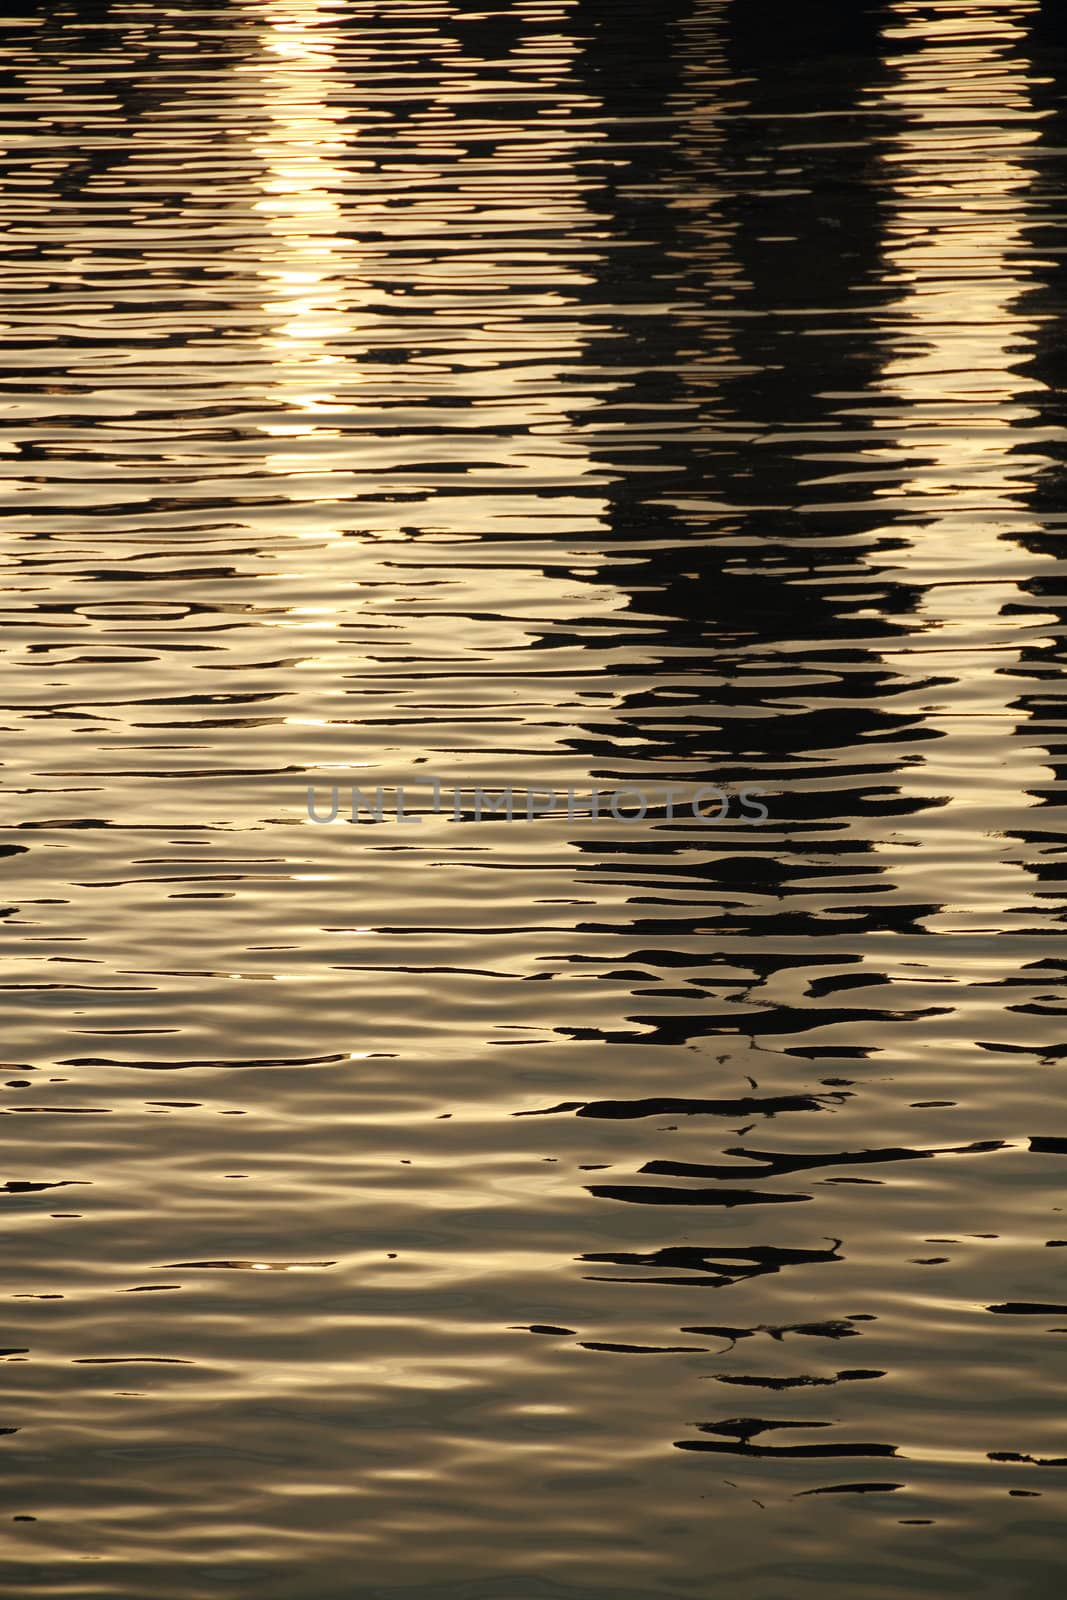 Warm tones ripples by jasony00